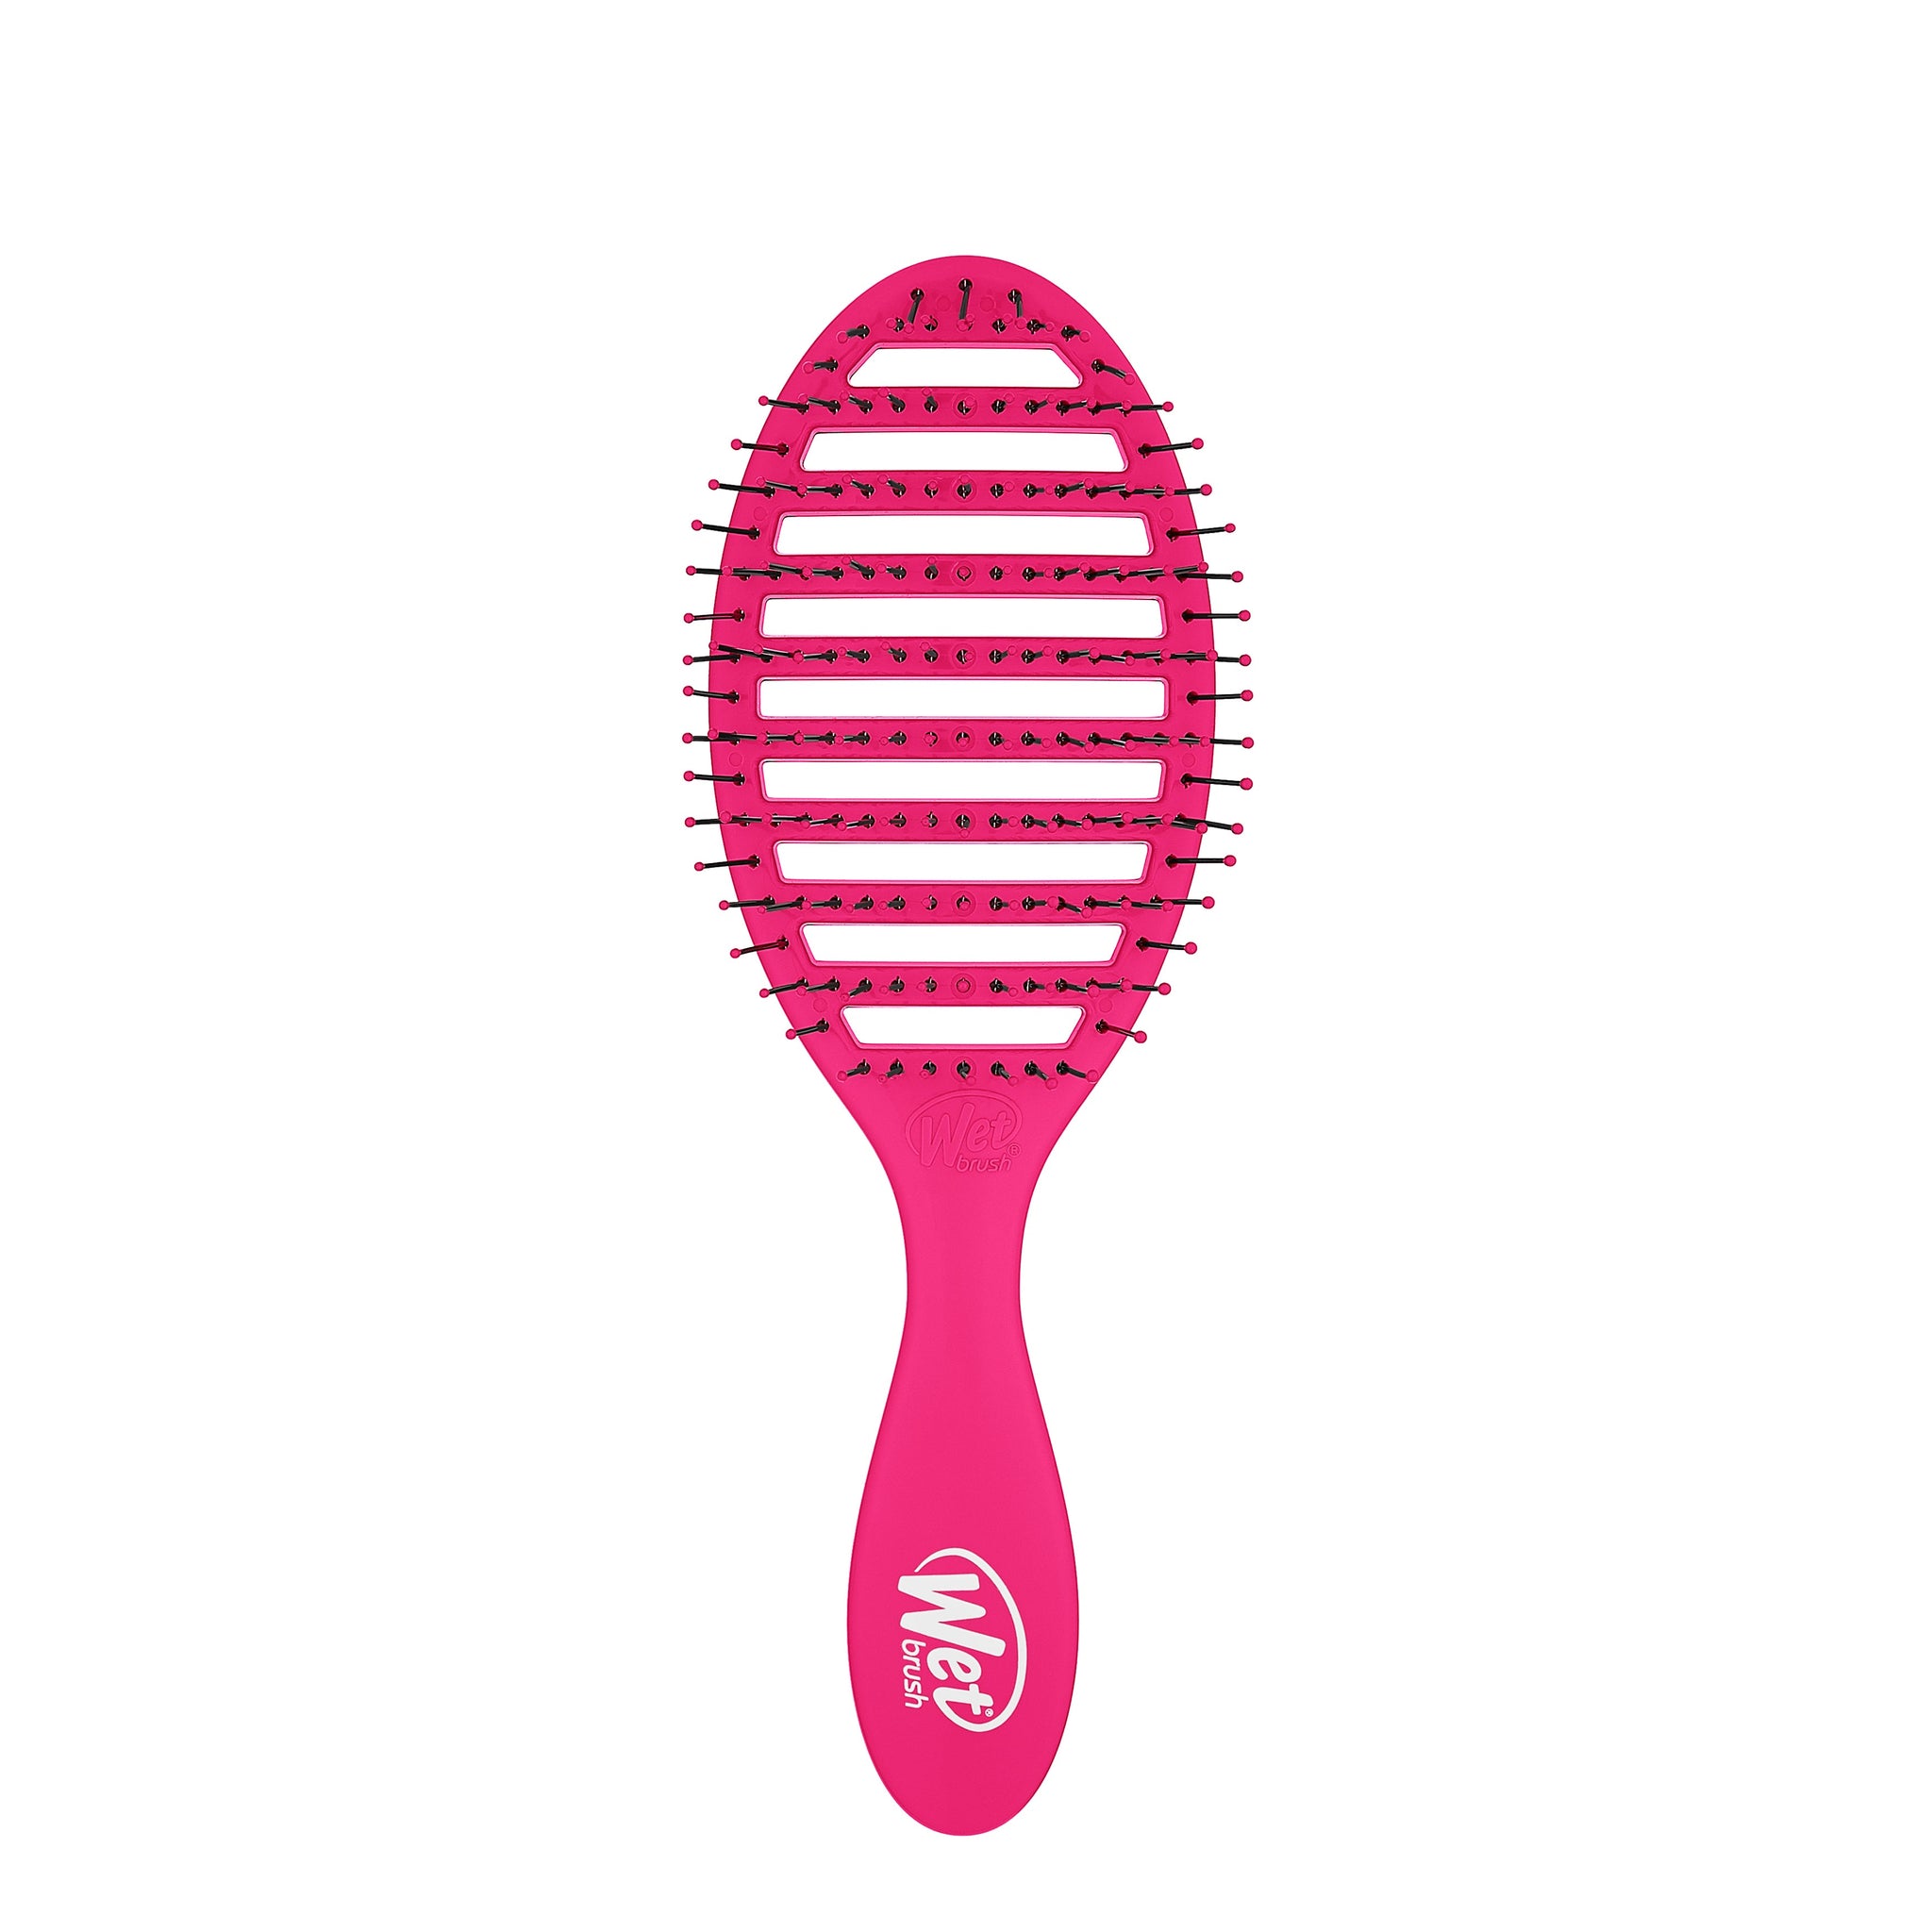 HAIR, The Wet Brush Pro Detangle Professional vs. The Original Tangle  Teezer, Cosmetic Proof